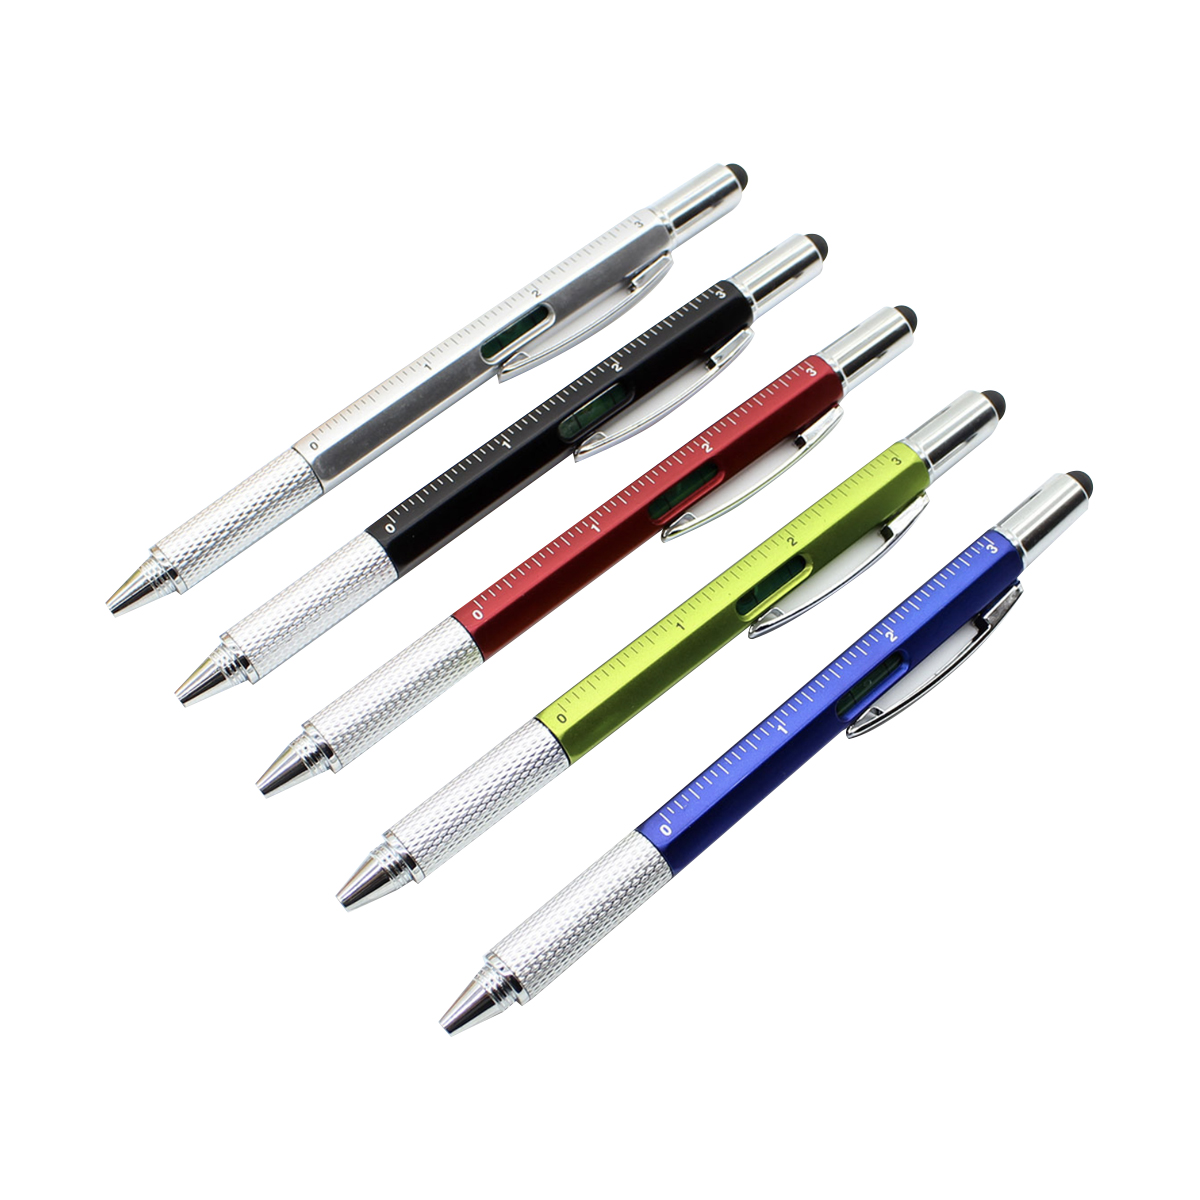 6 in 1 Multi Function Tool Pen